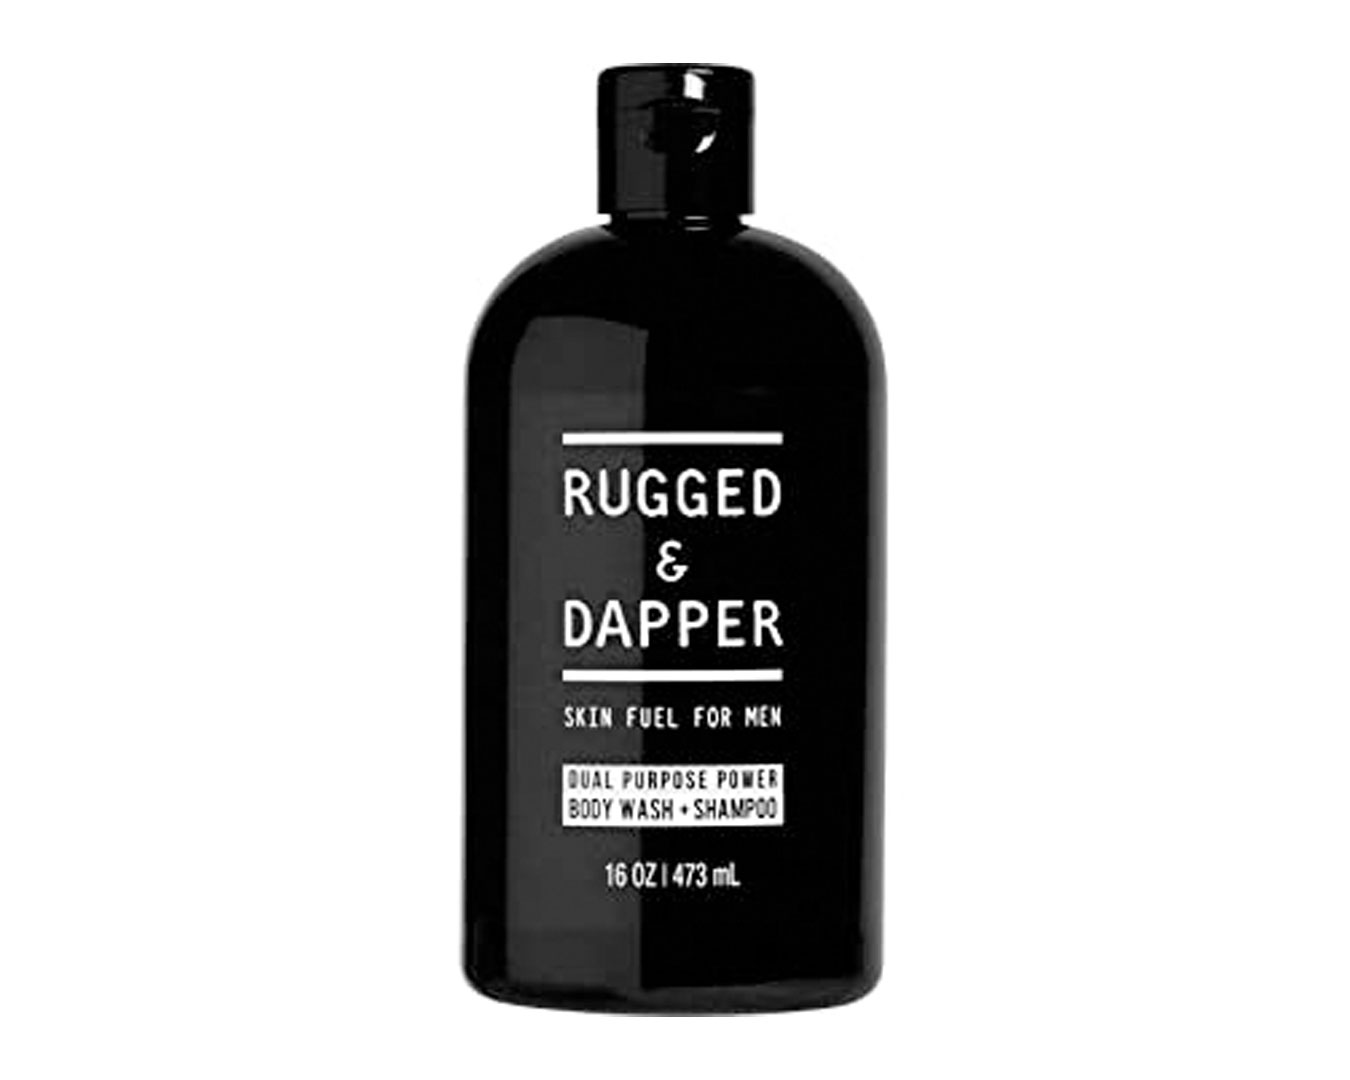 Rugged & Dapper Dual Purpose Power Body Wash